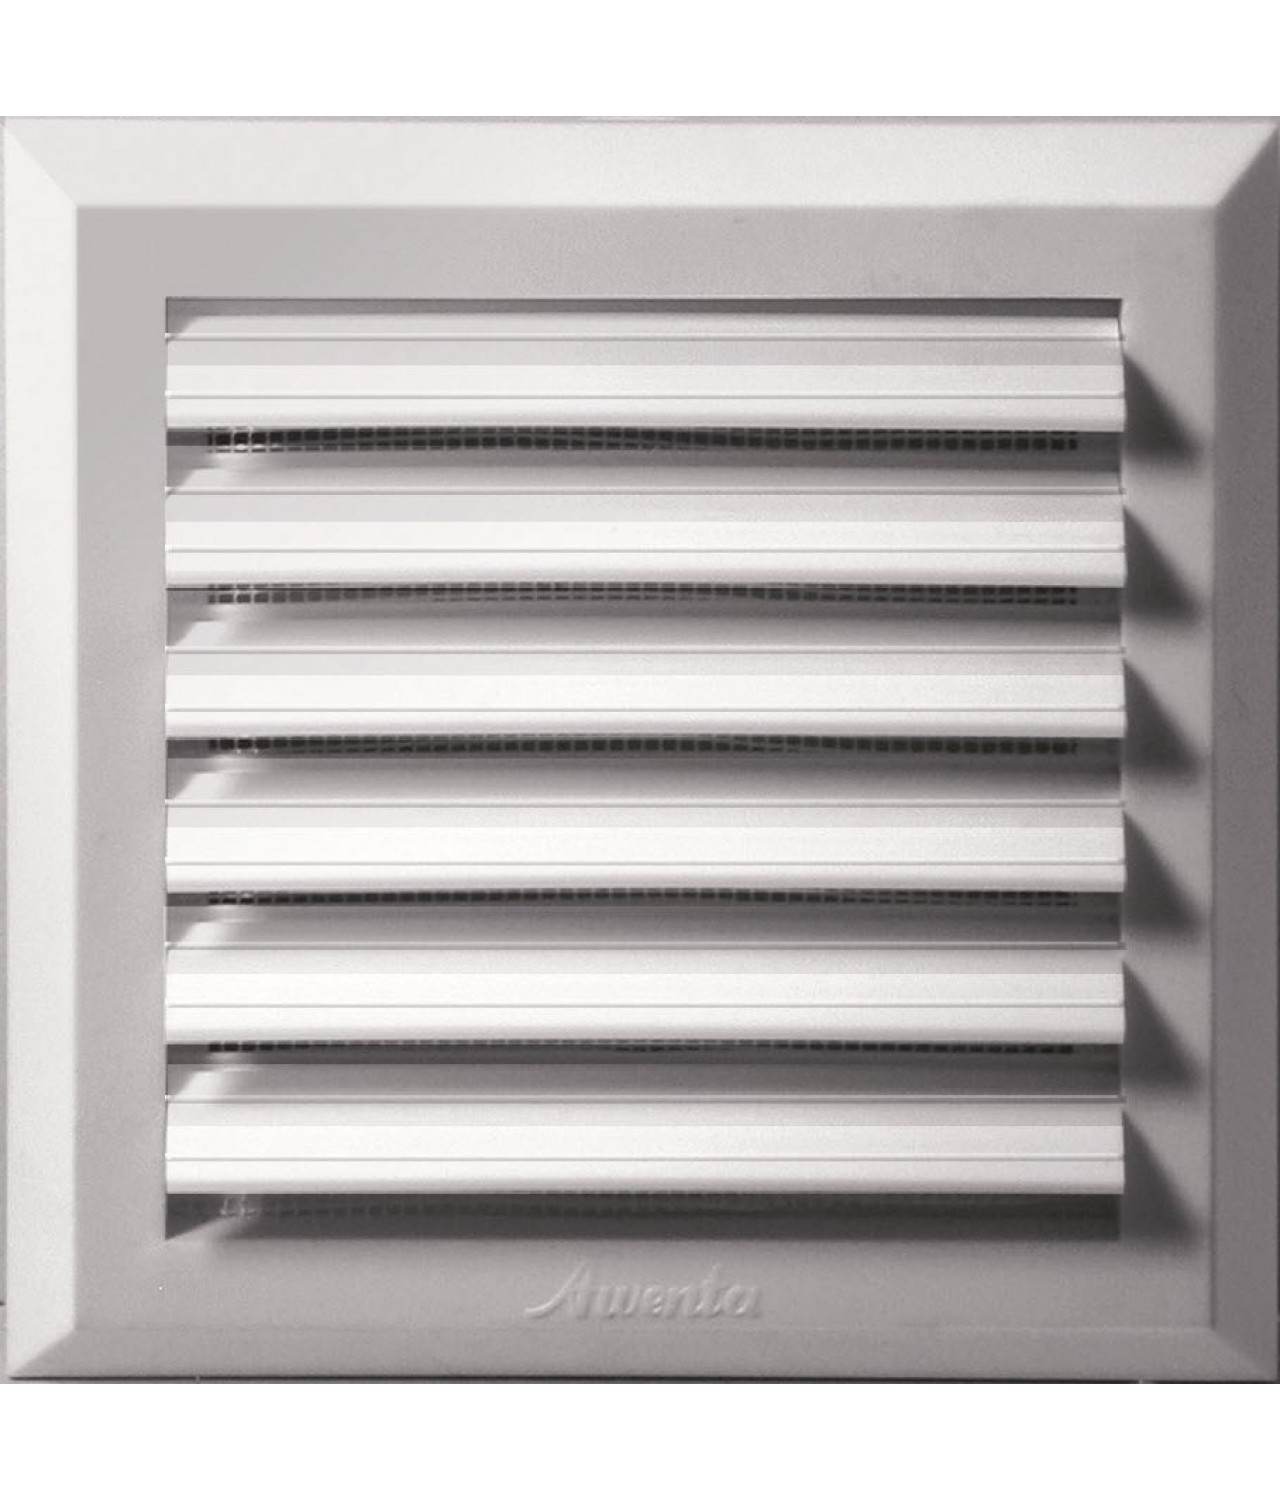 Ventilation grille with shutter GRT78, 175x175 mm, Ø125 mm - image